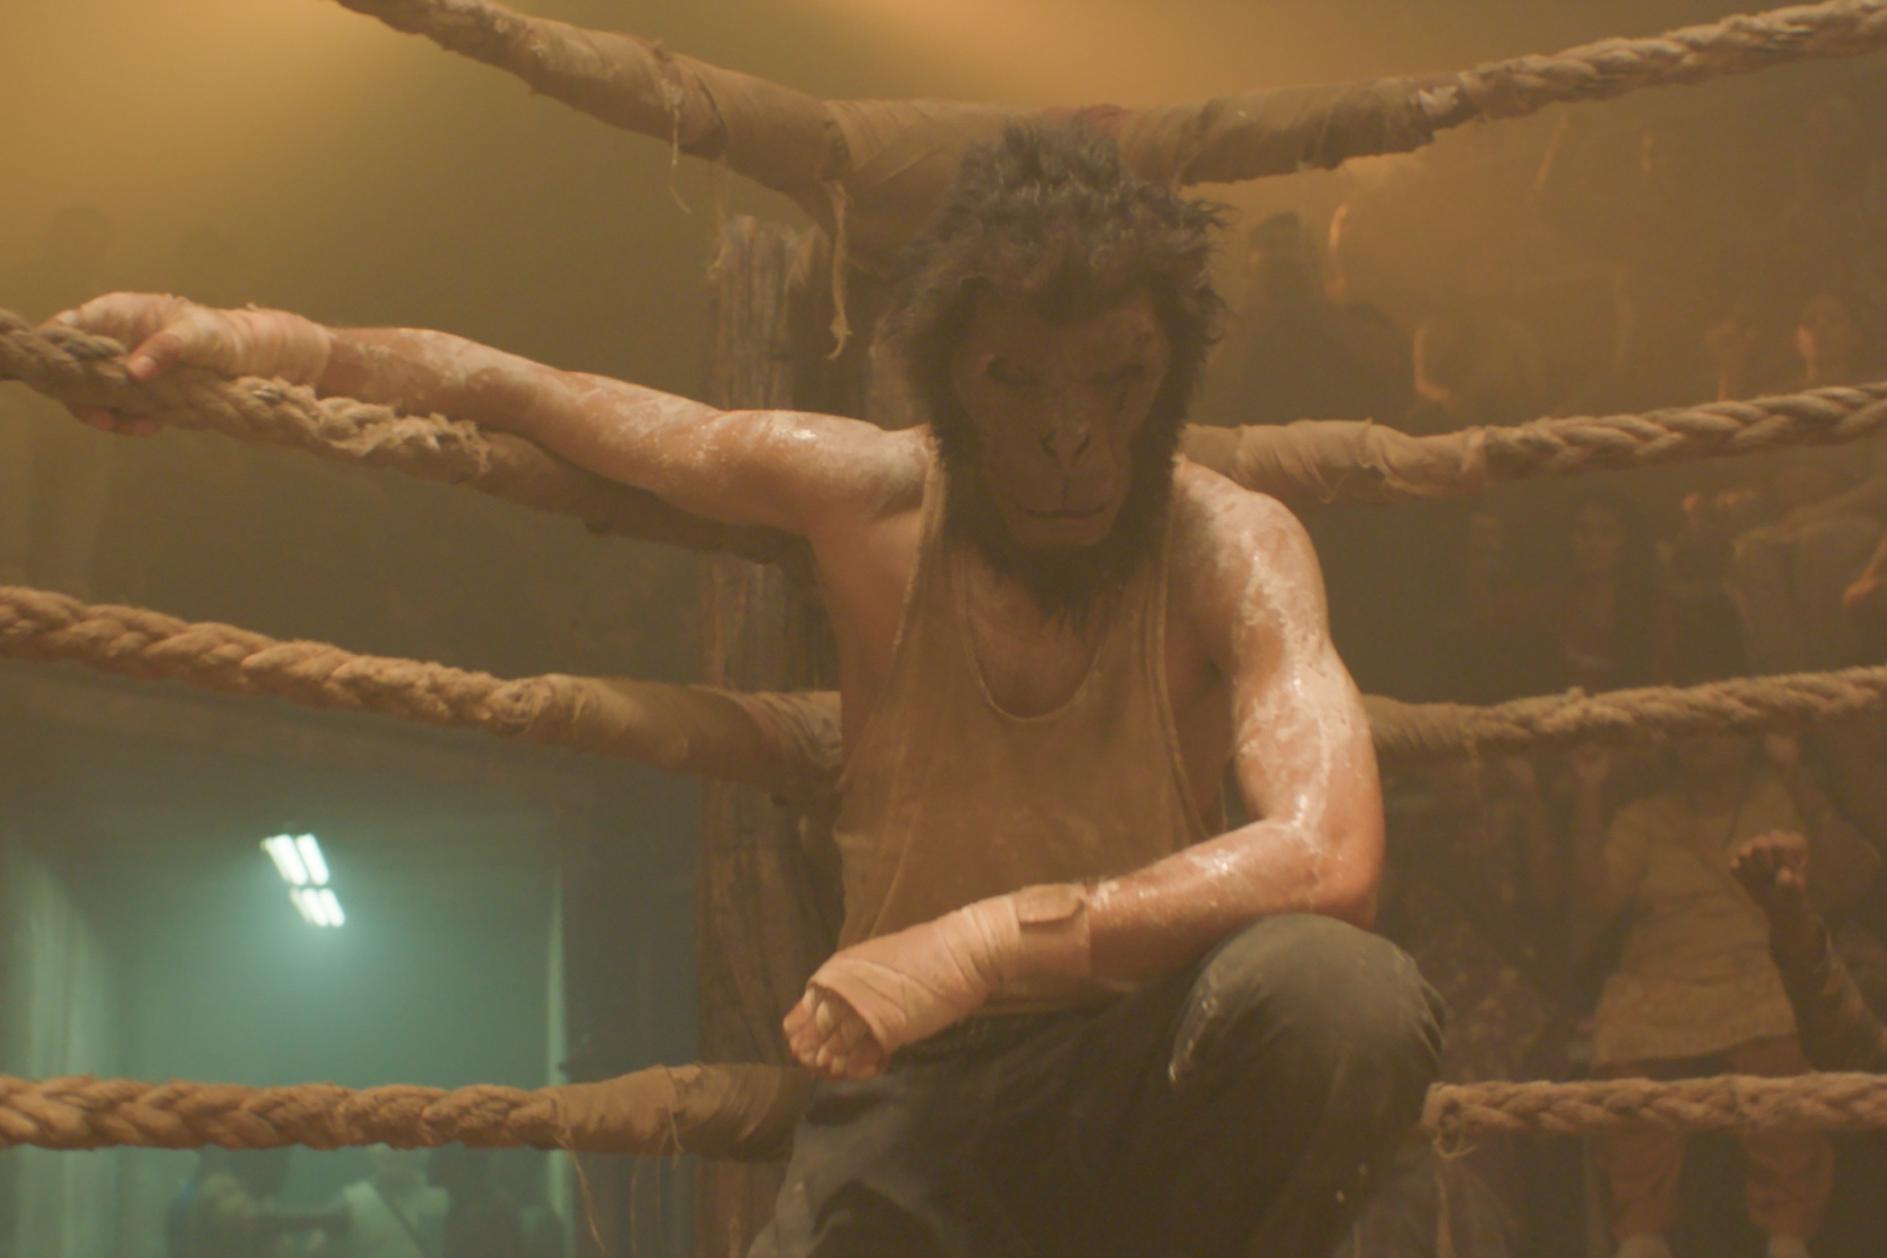 monkey man: dev patel and jordan peele on their revenge action movie